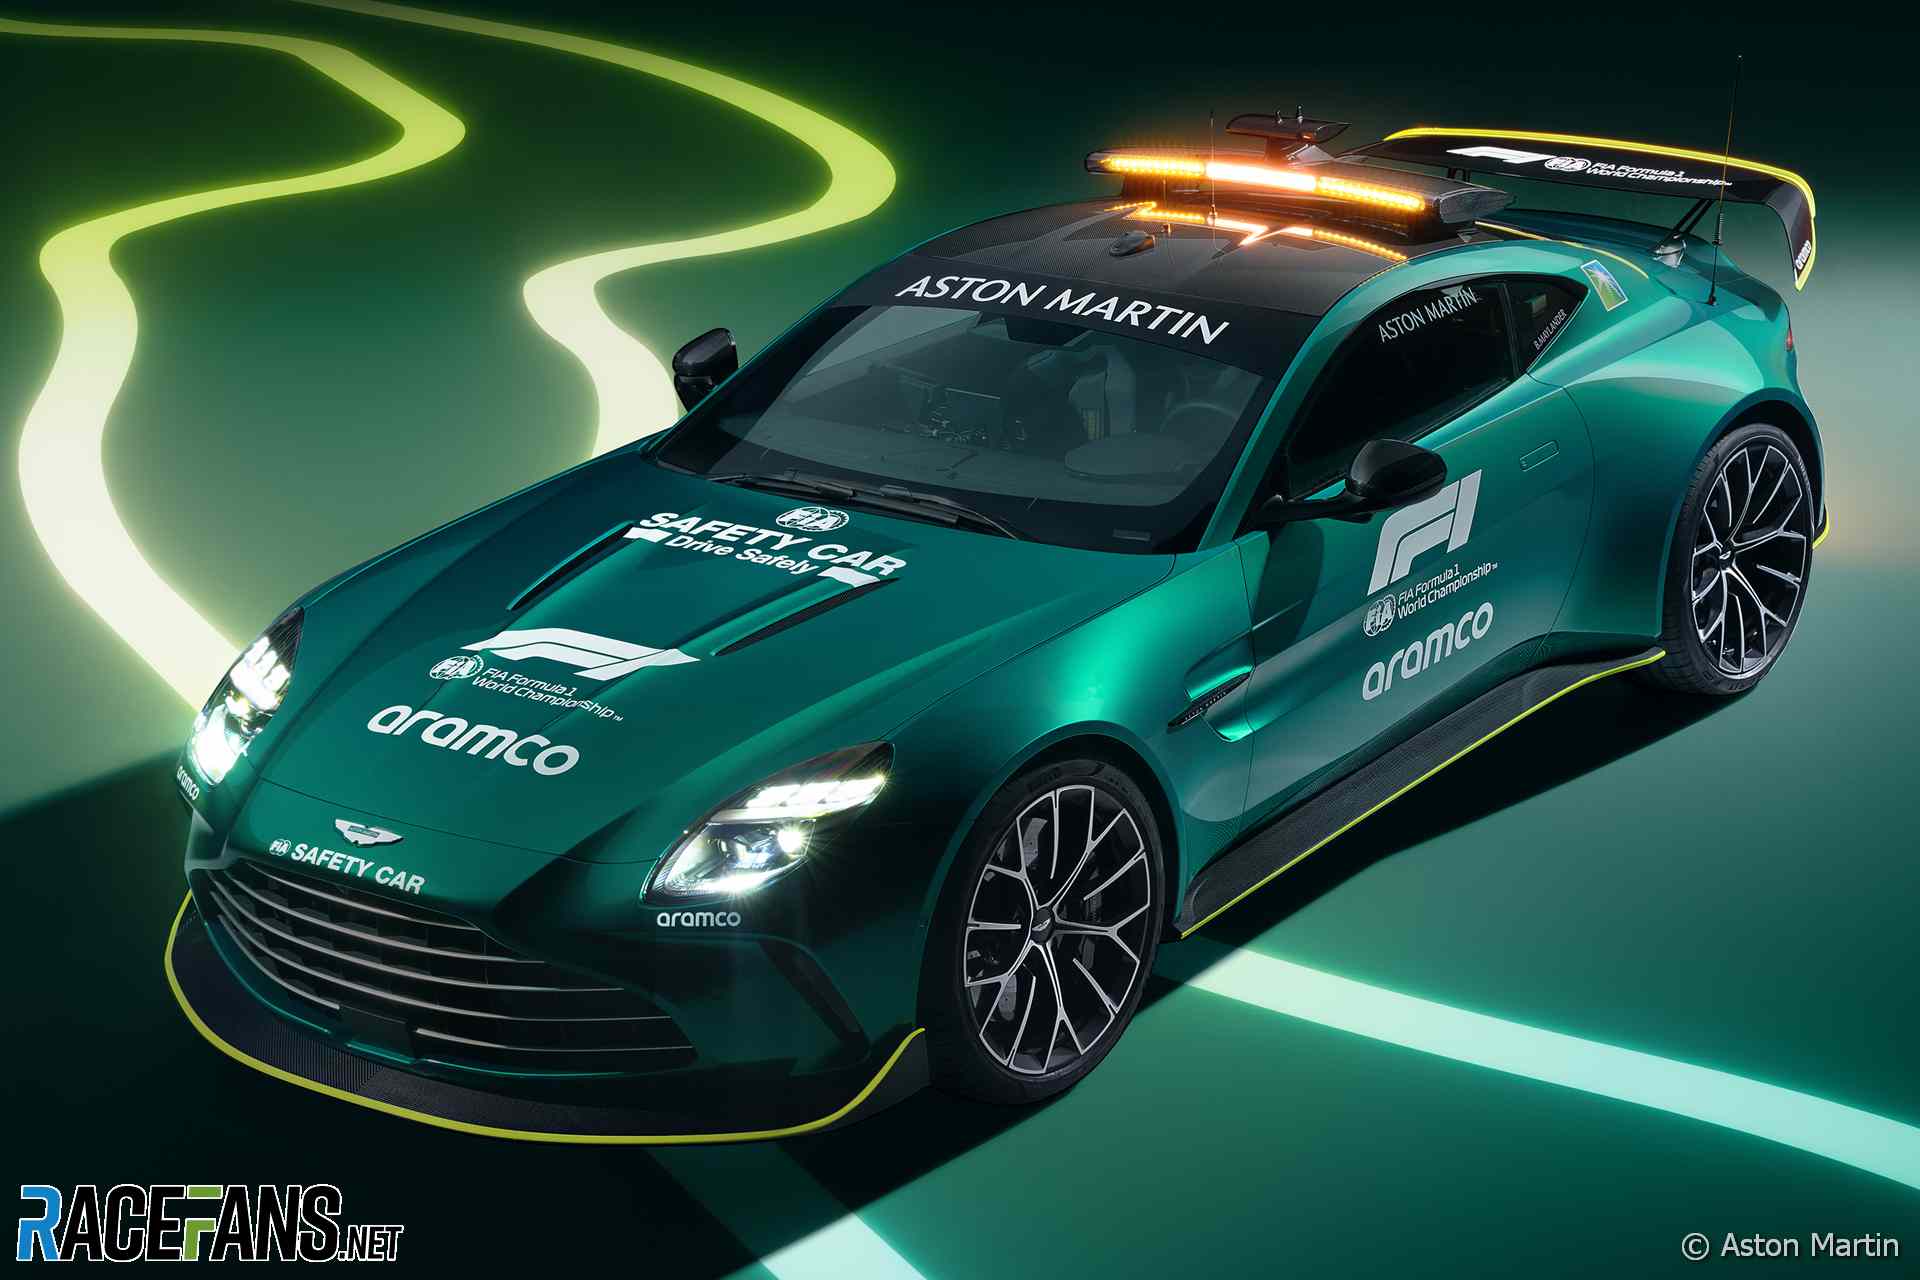 Aston Martin reveals sleek design of Vantage as F1 Safety Car